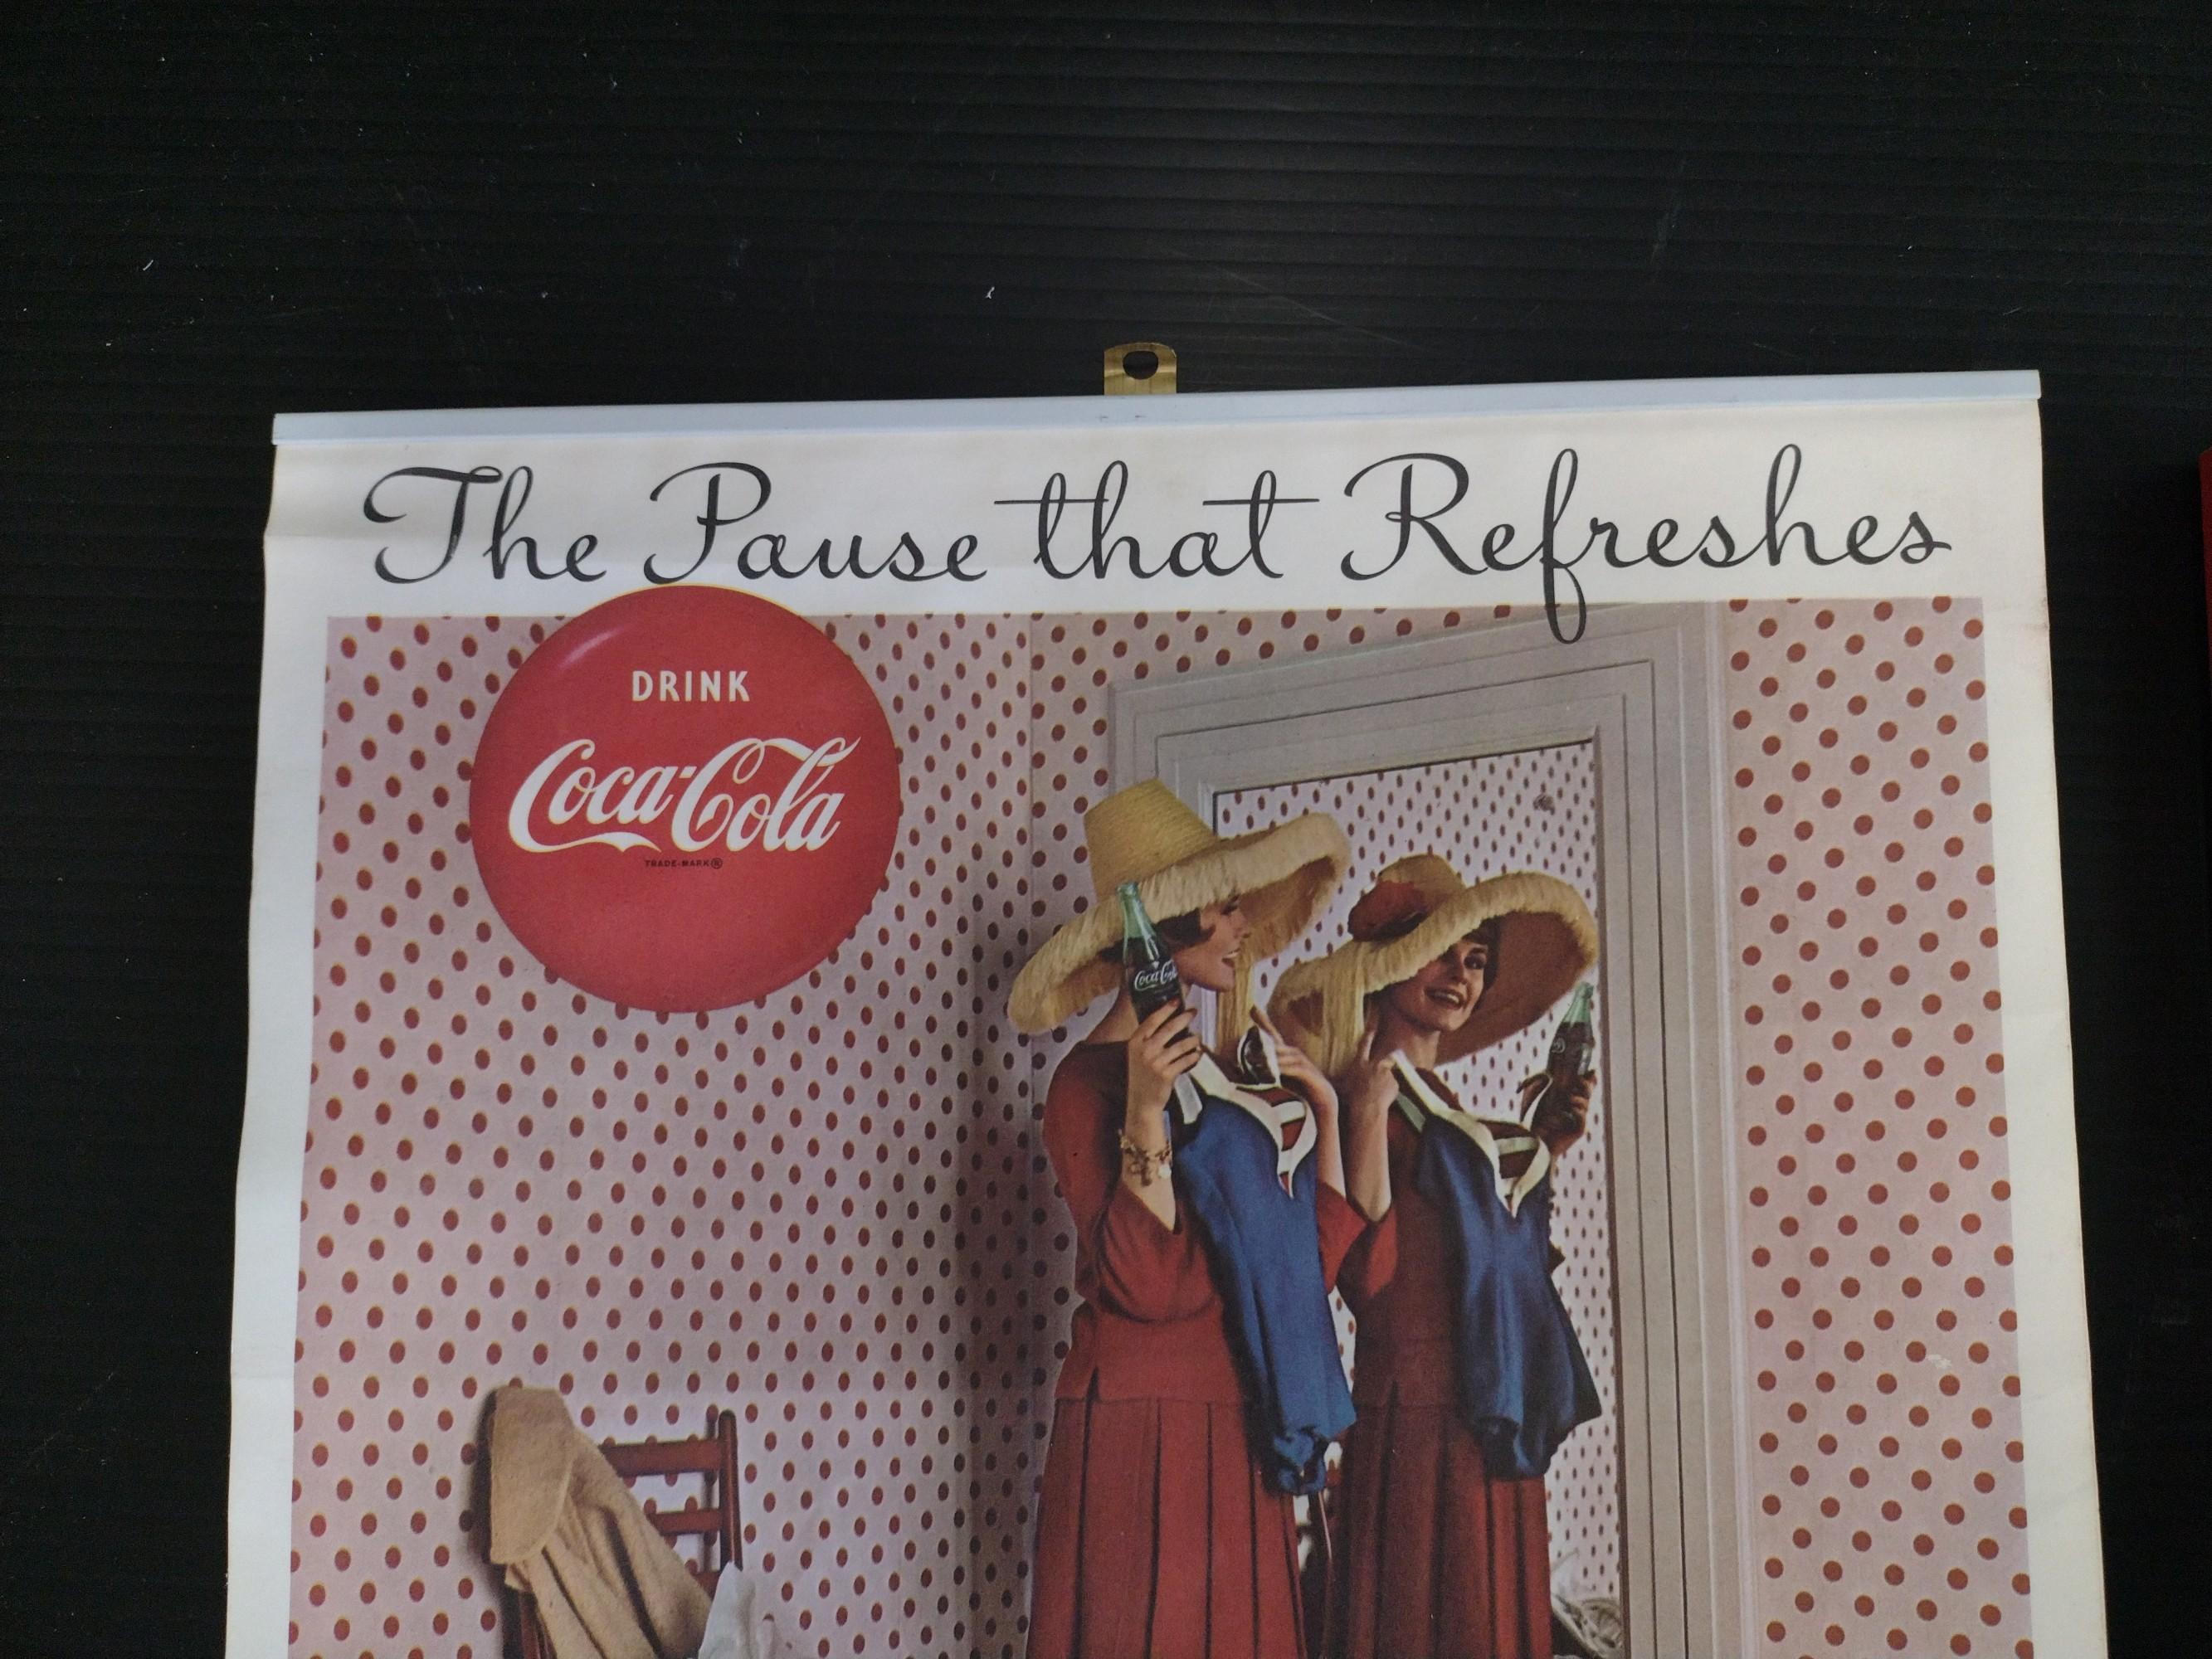 1963 Coca-Cola Calendar and Advertising Sign